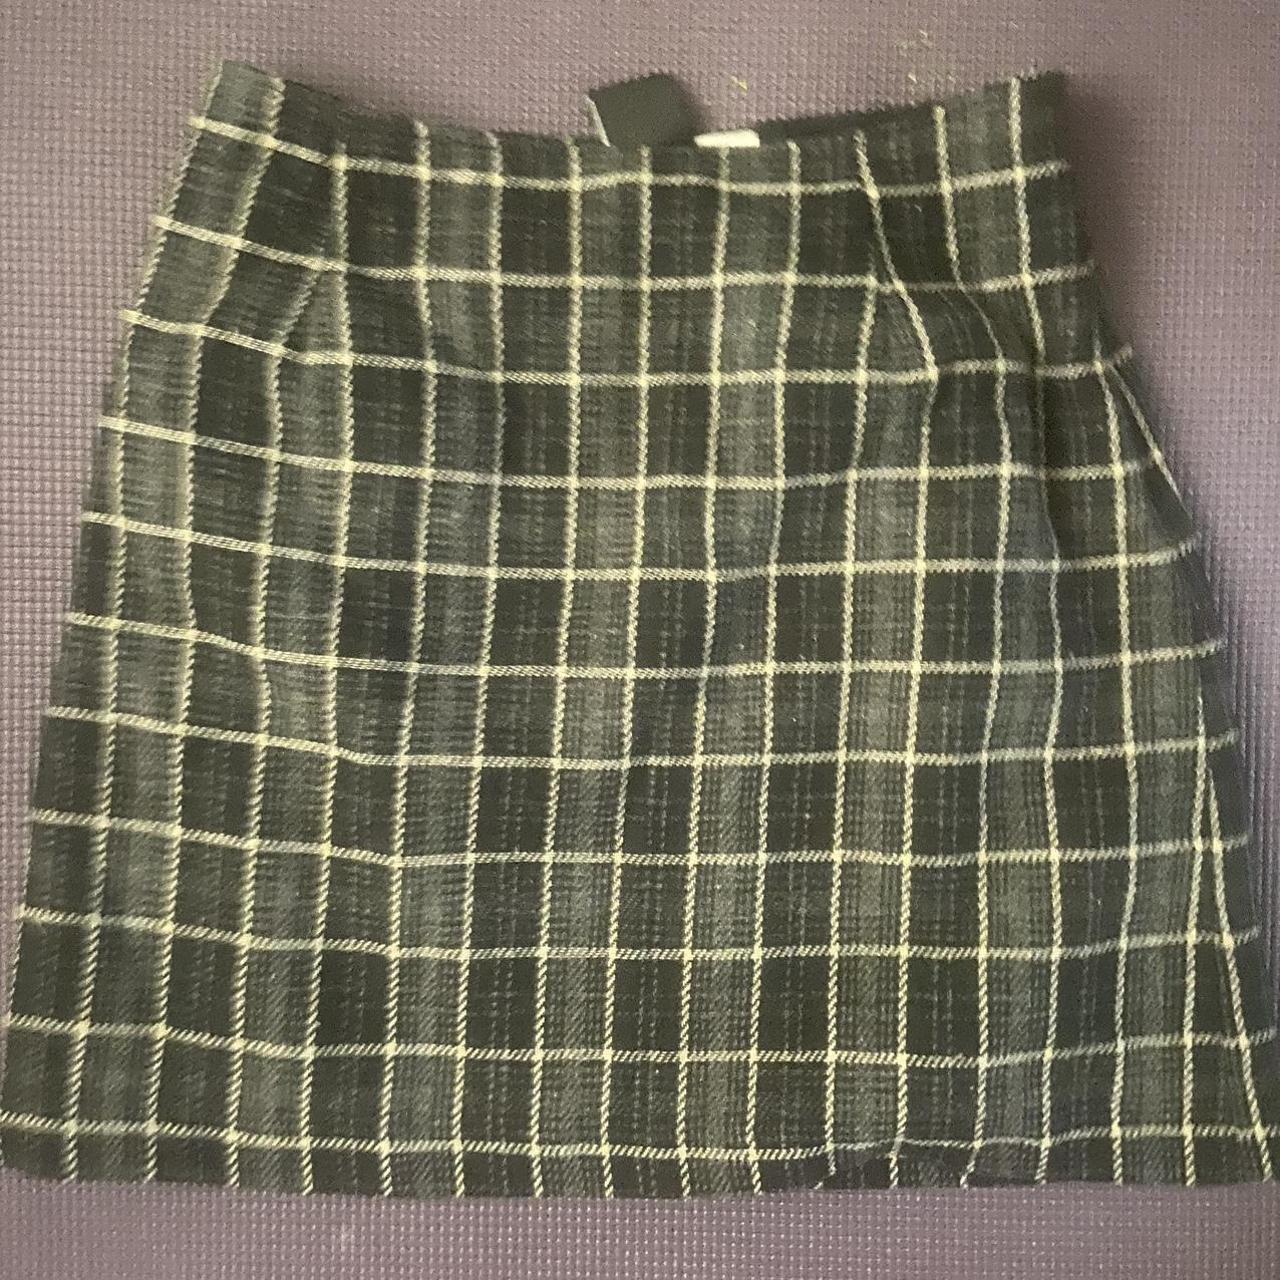 Wool plaid skirt, greenish undertone. Size 6. It has... - Depop